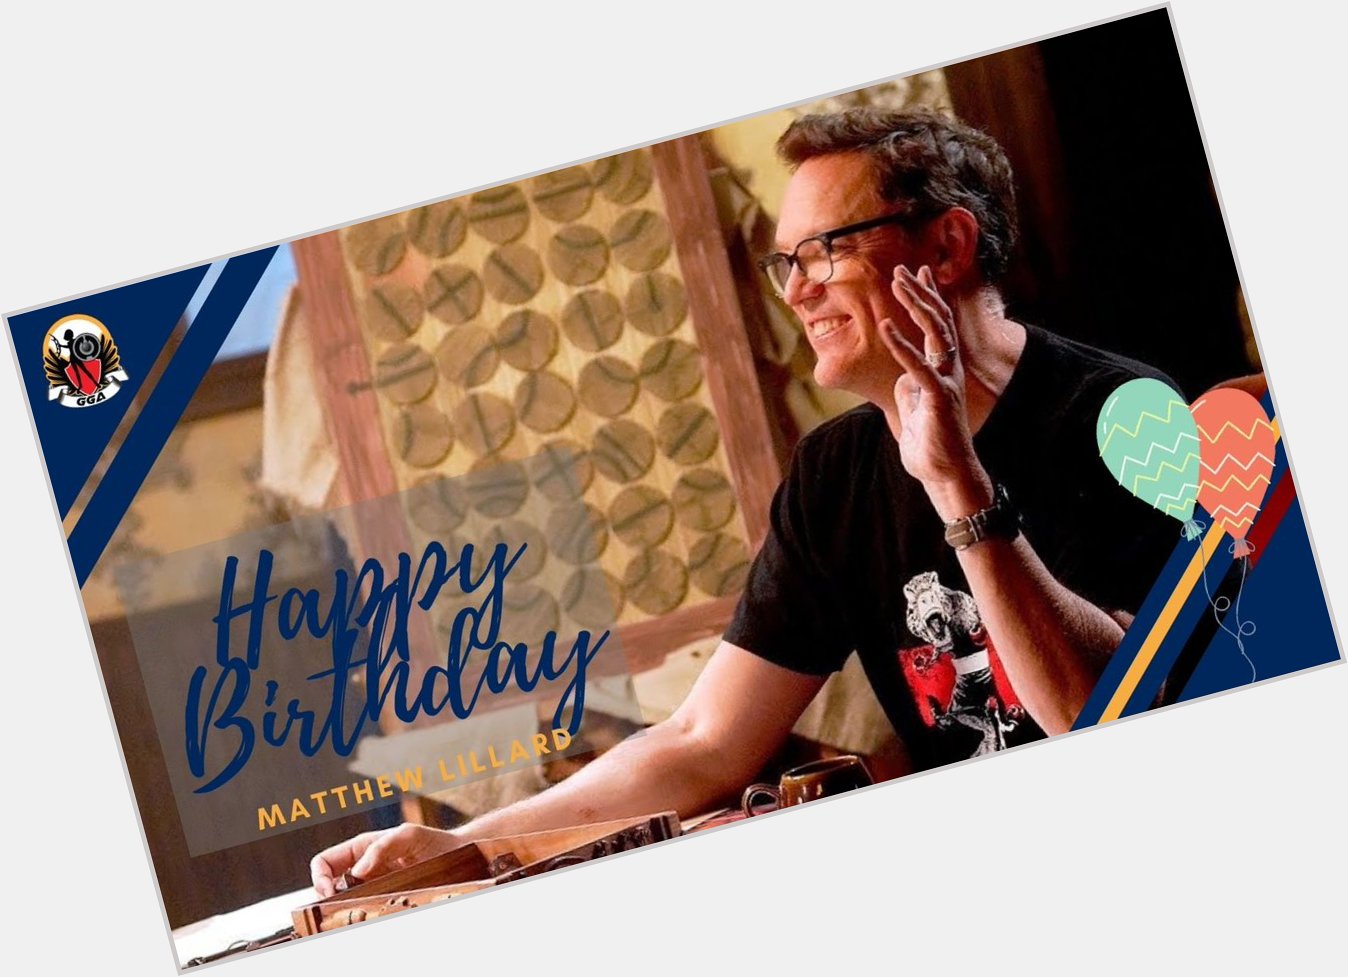 Happy birthday to our favorite Shaggy and fellow geek - Matthew Lillard!  